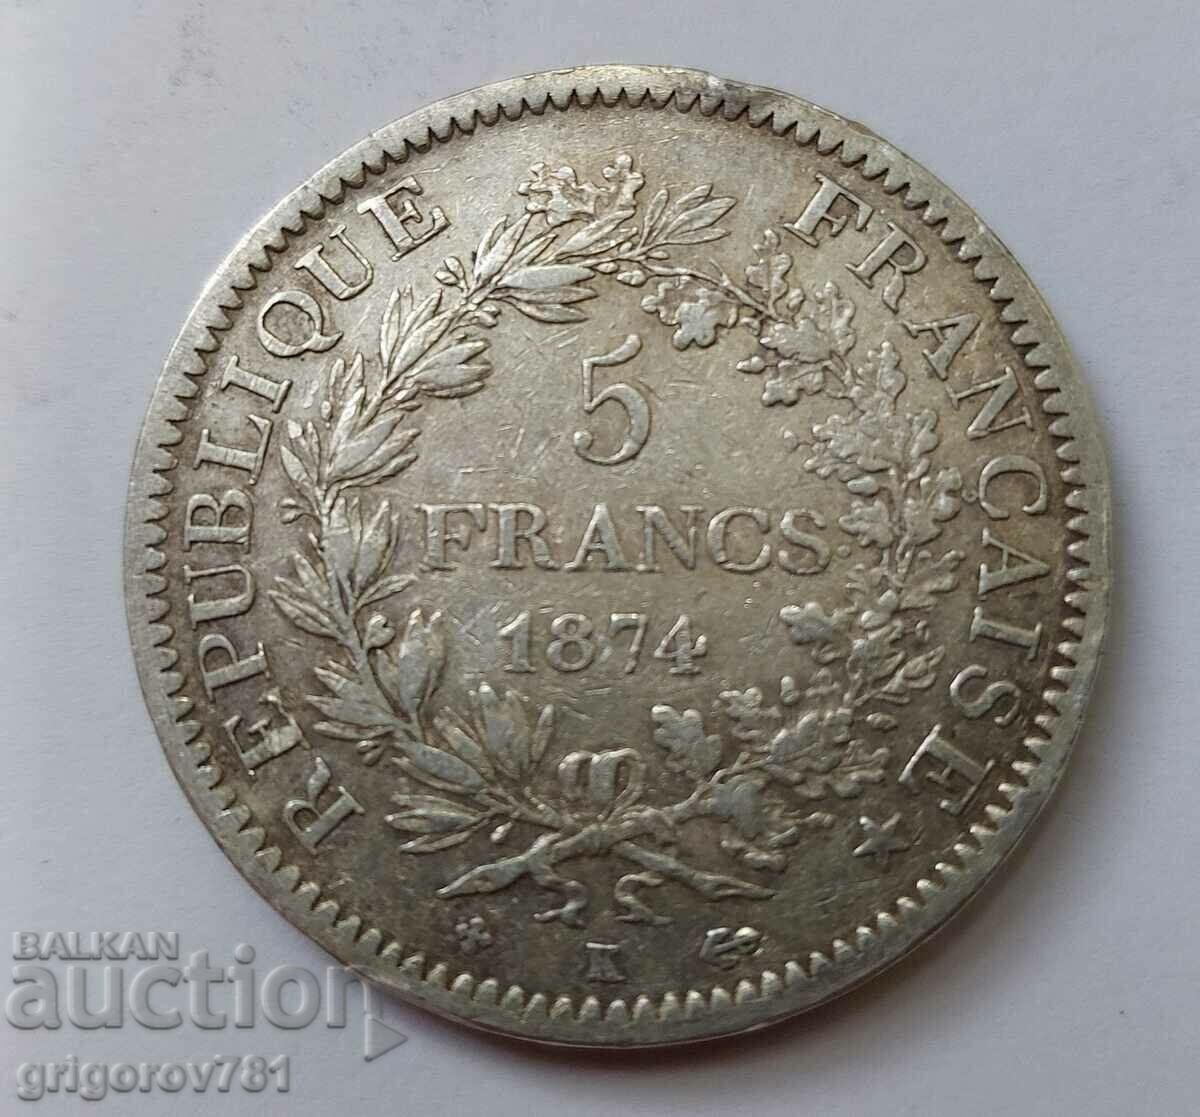 5 francs silver France 1874 K - silver coin # 30